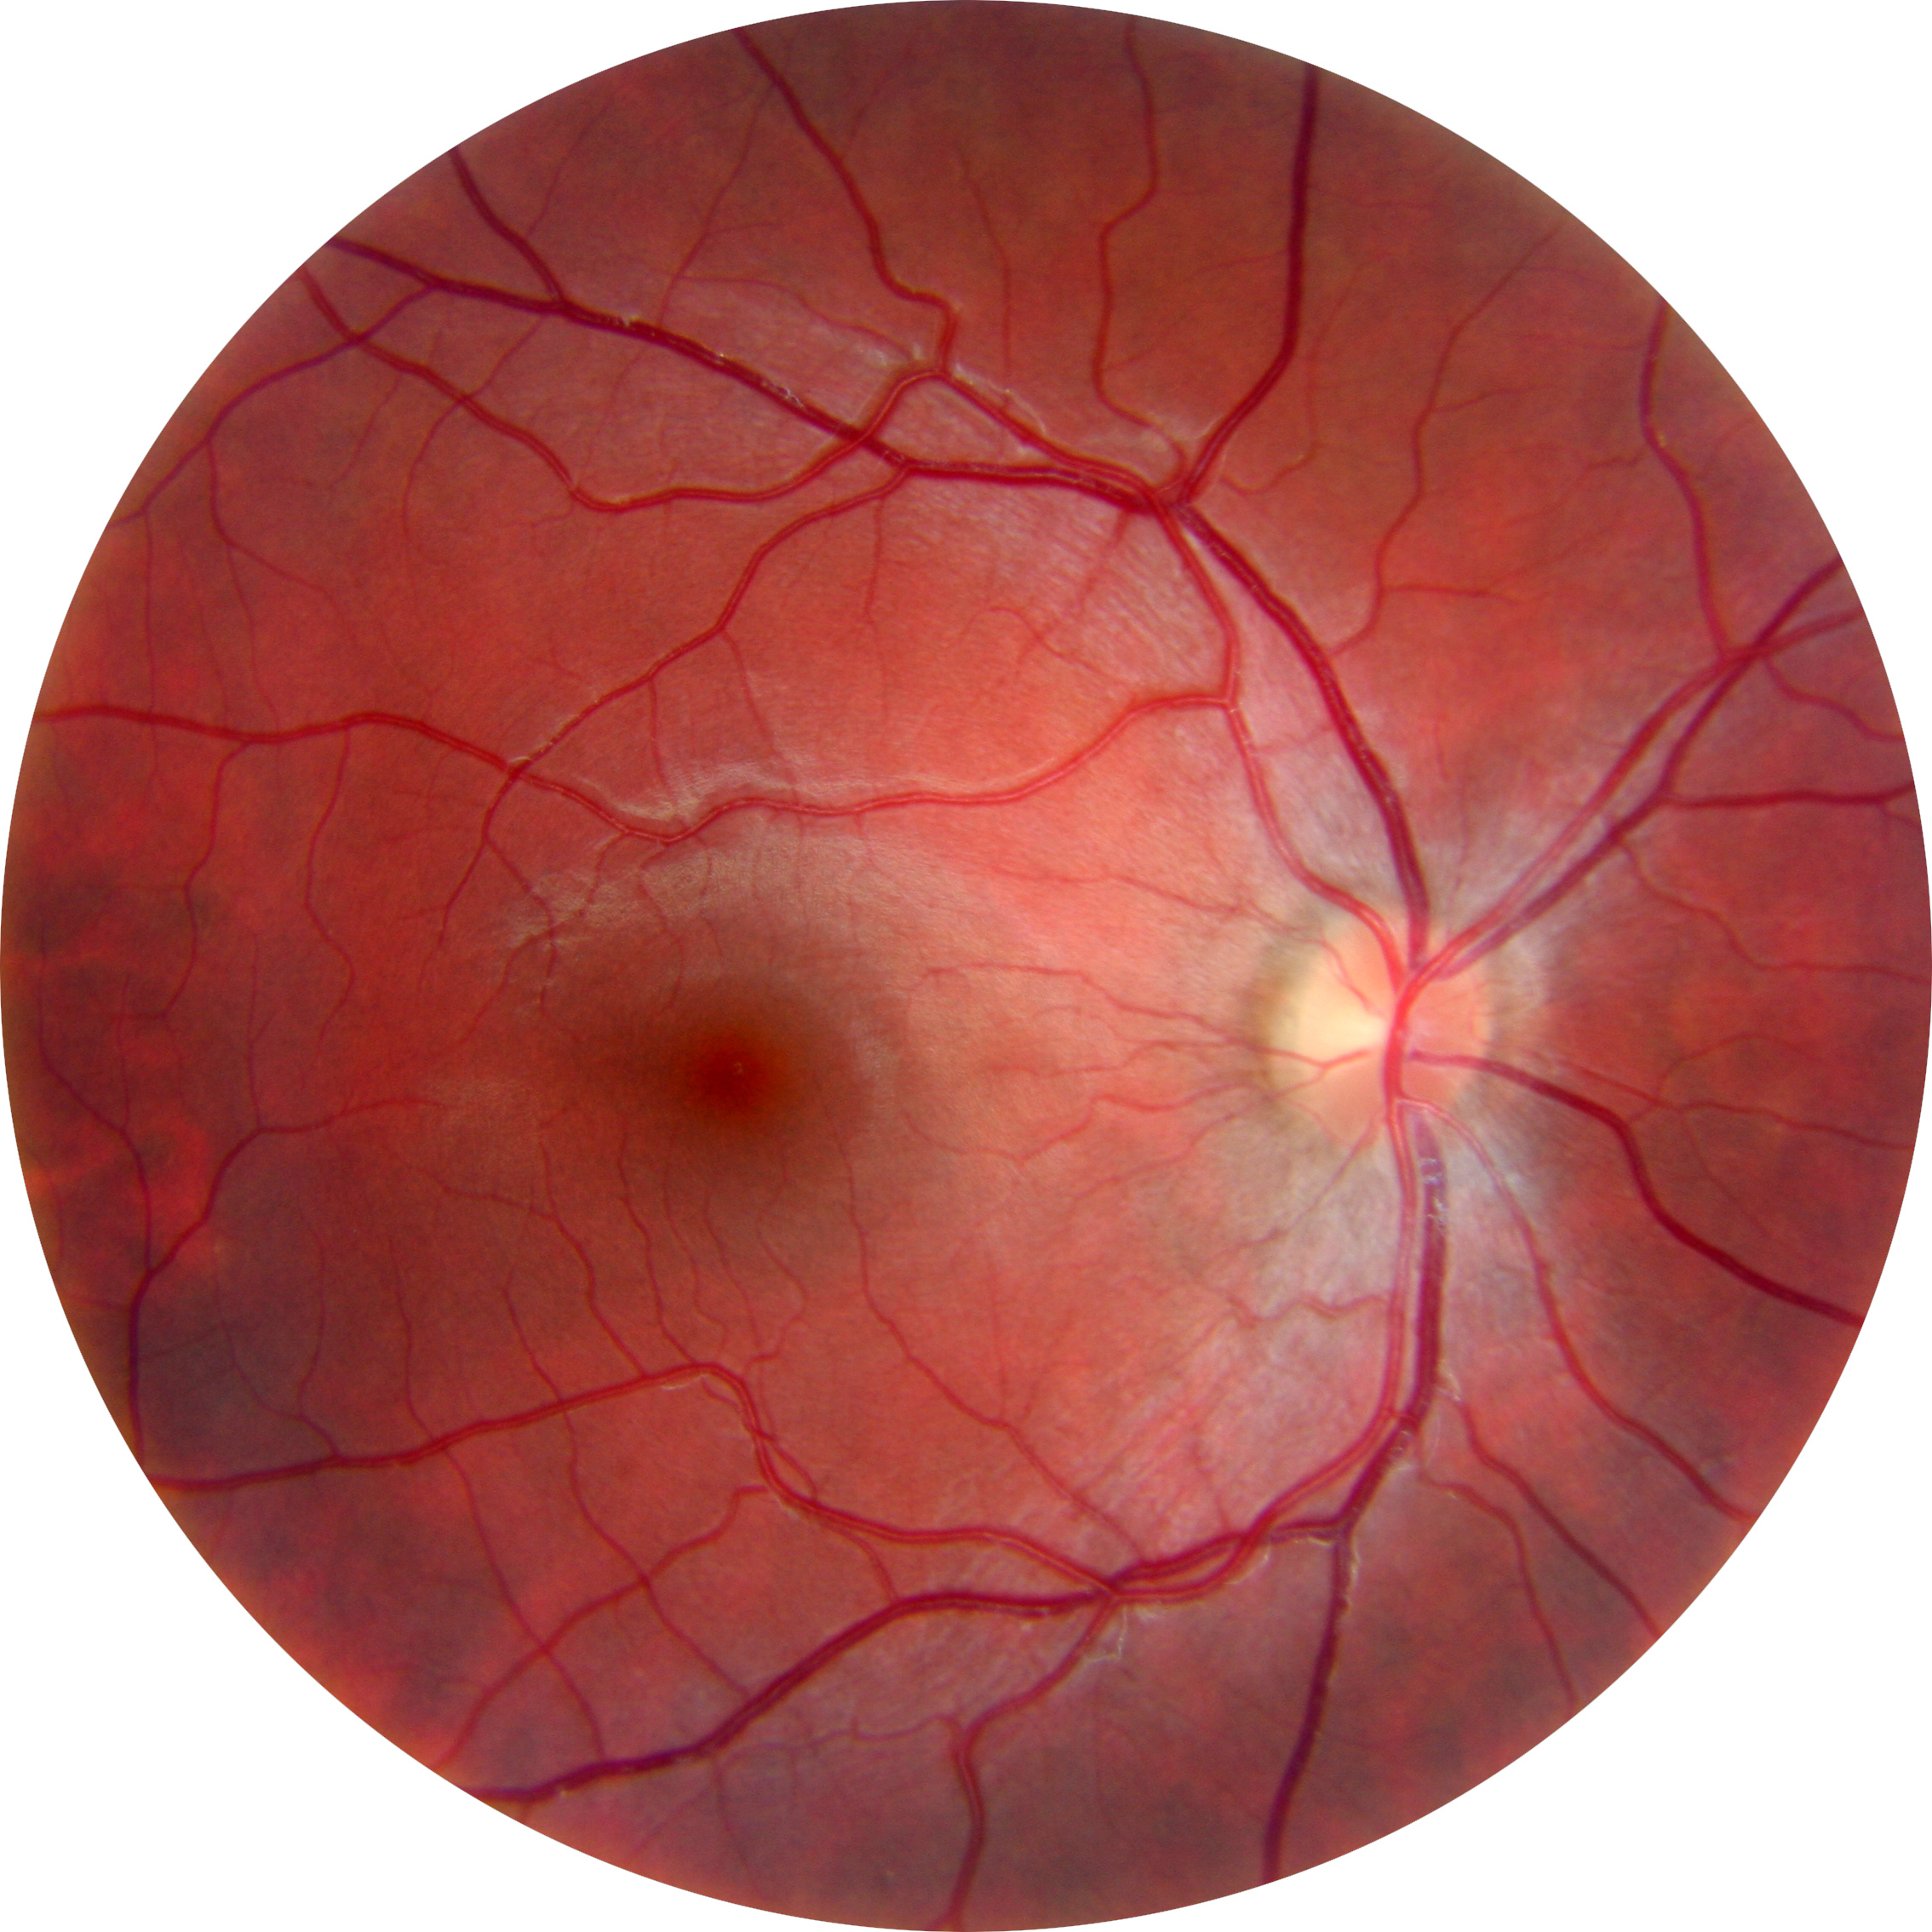 TRC-NW6 TRC-NW6 sample retinal image